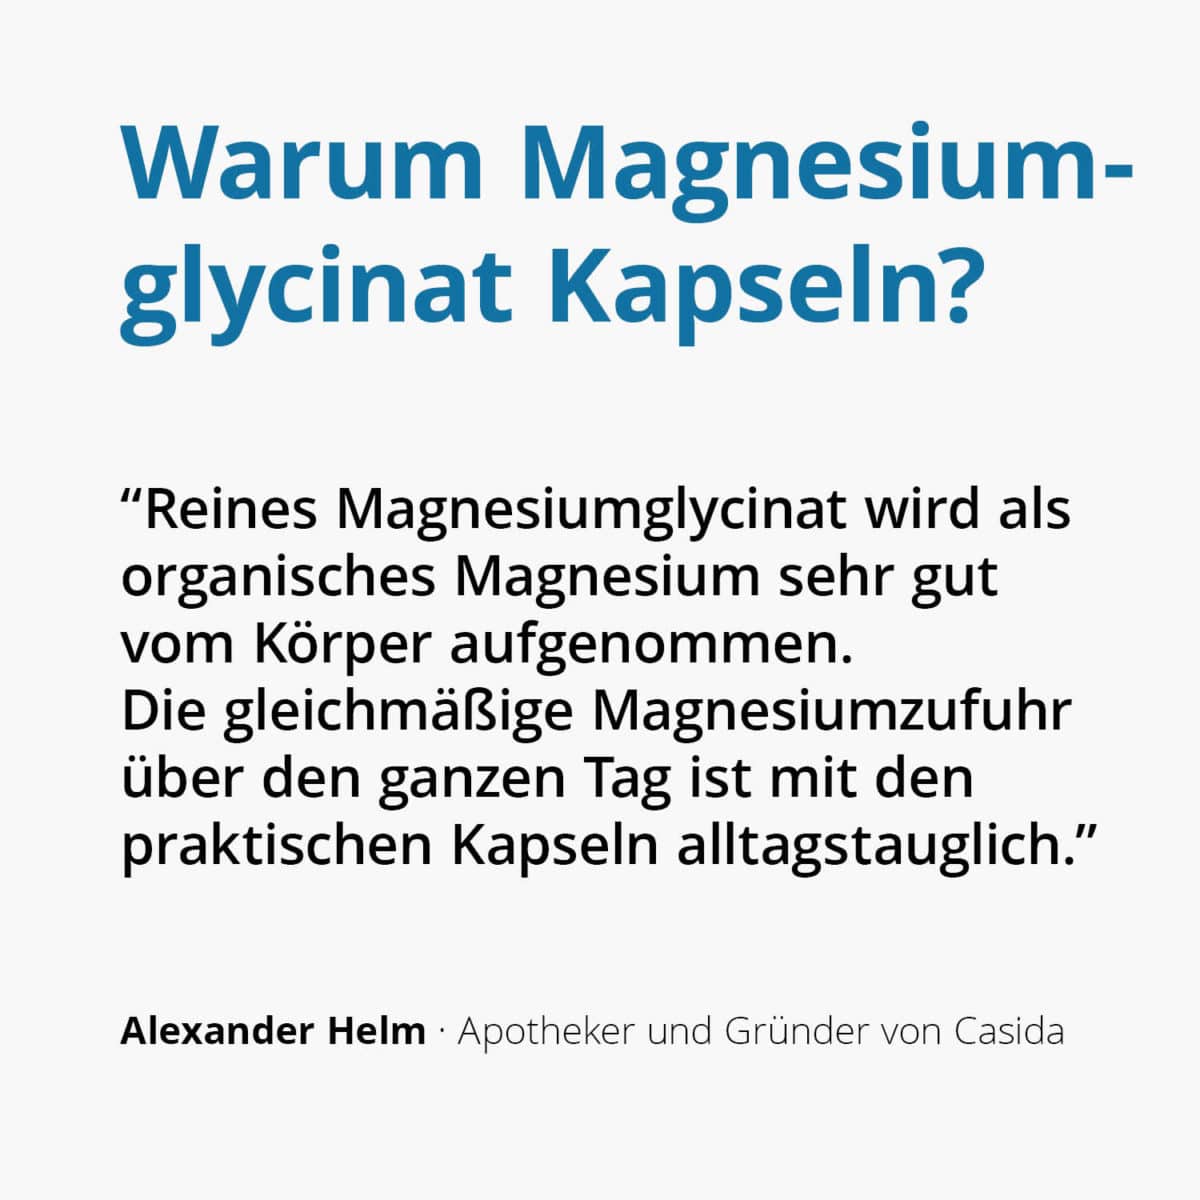 Casida Magnesiumglycinat Kapseln Vital – 120 Stk. 14362480 PZN Apotheke Bioverfügbarkeit organisches Magnesium2